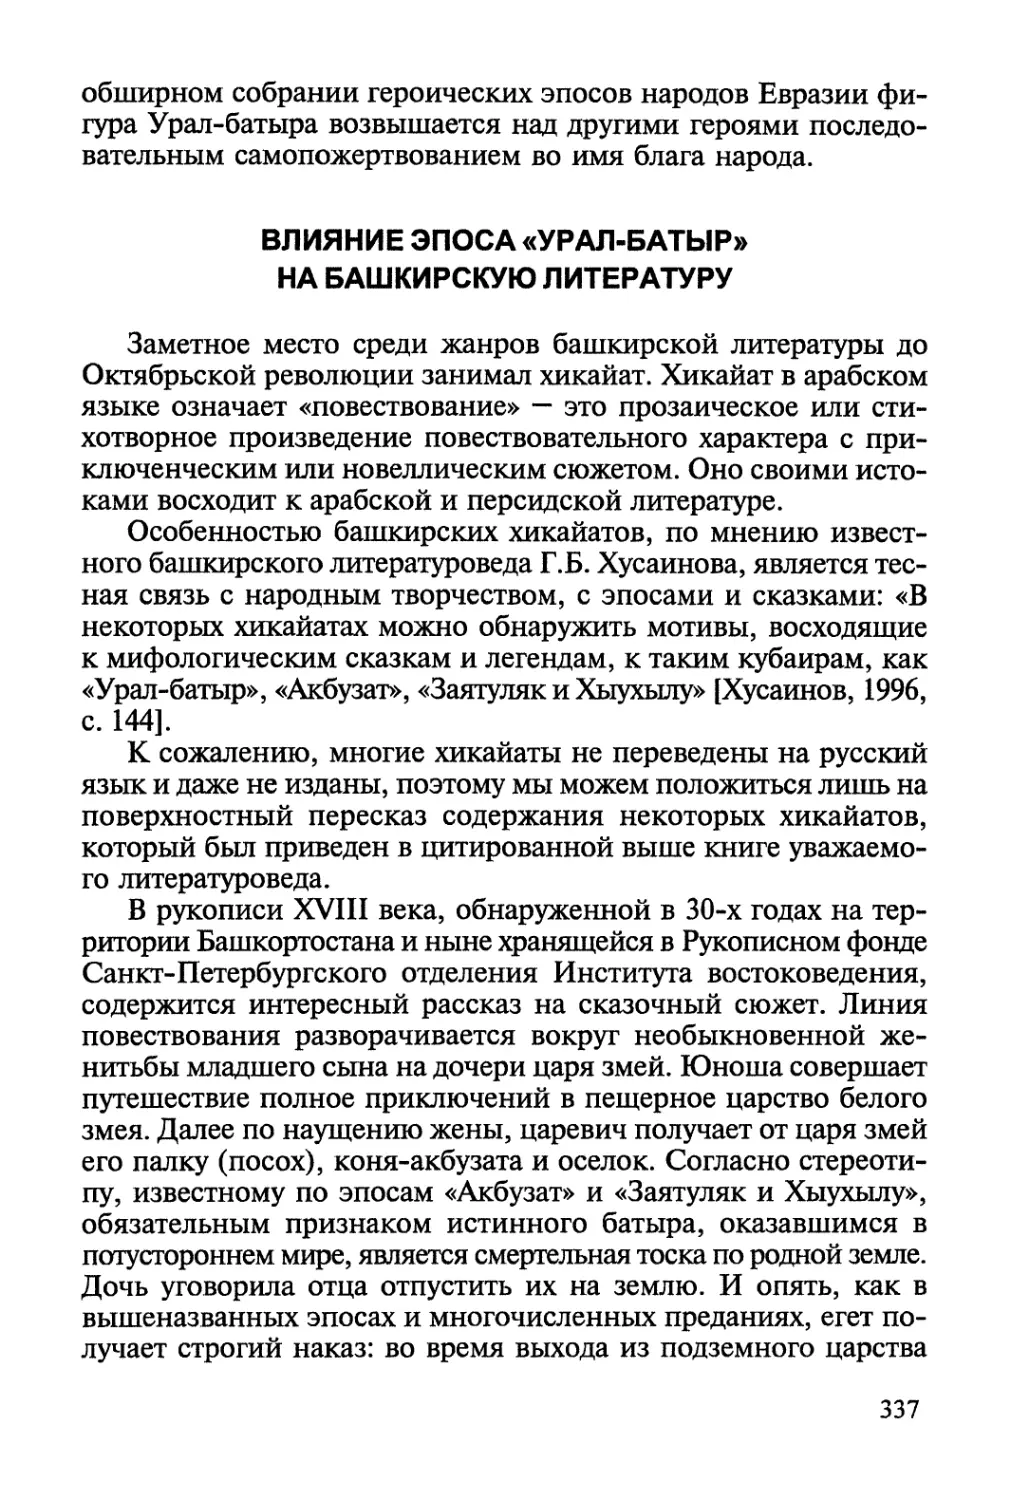 Влияние эпоса «Урал-батыр» на башкирскую литературу